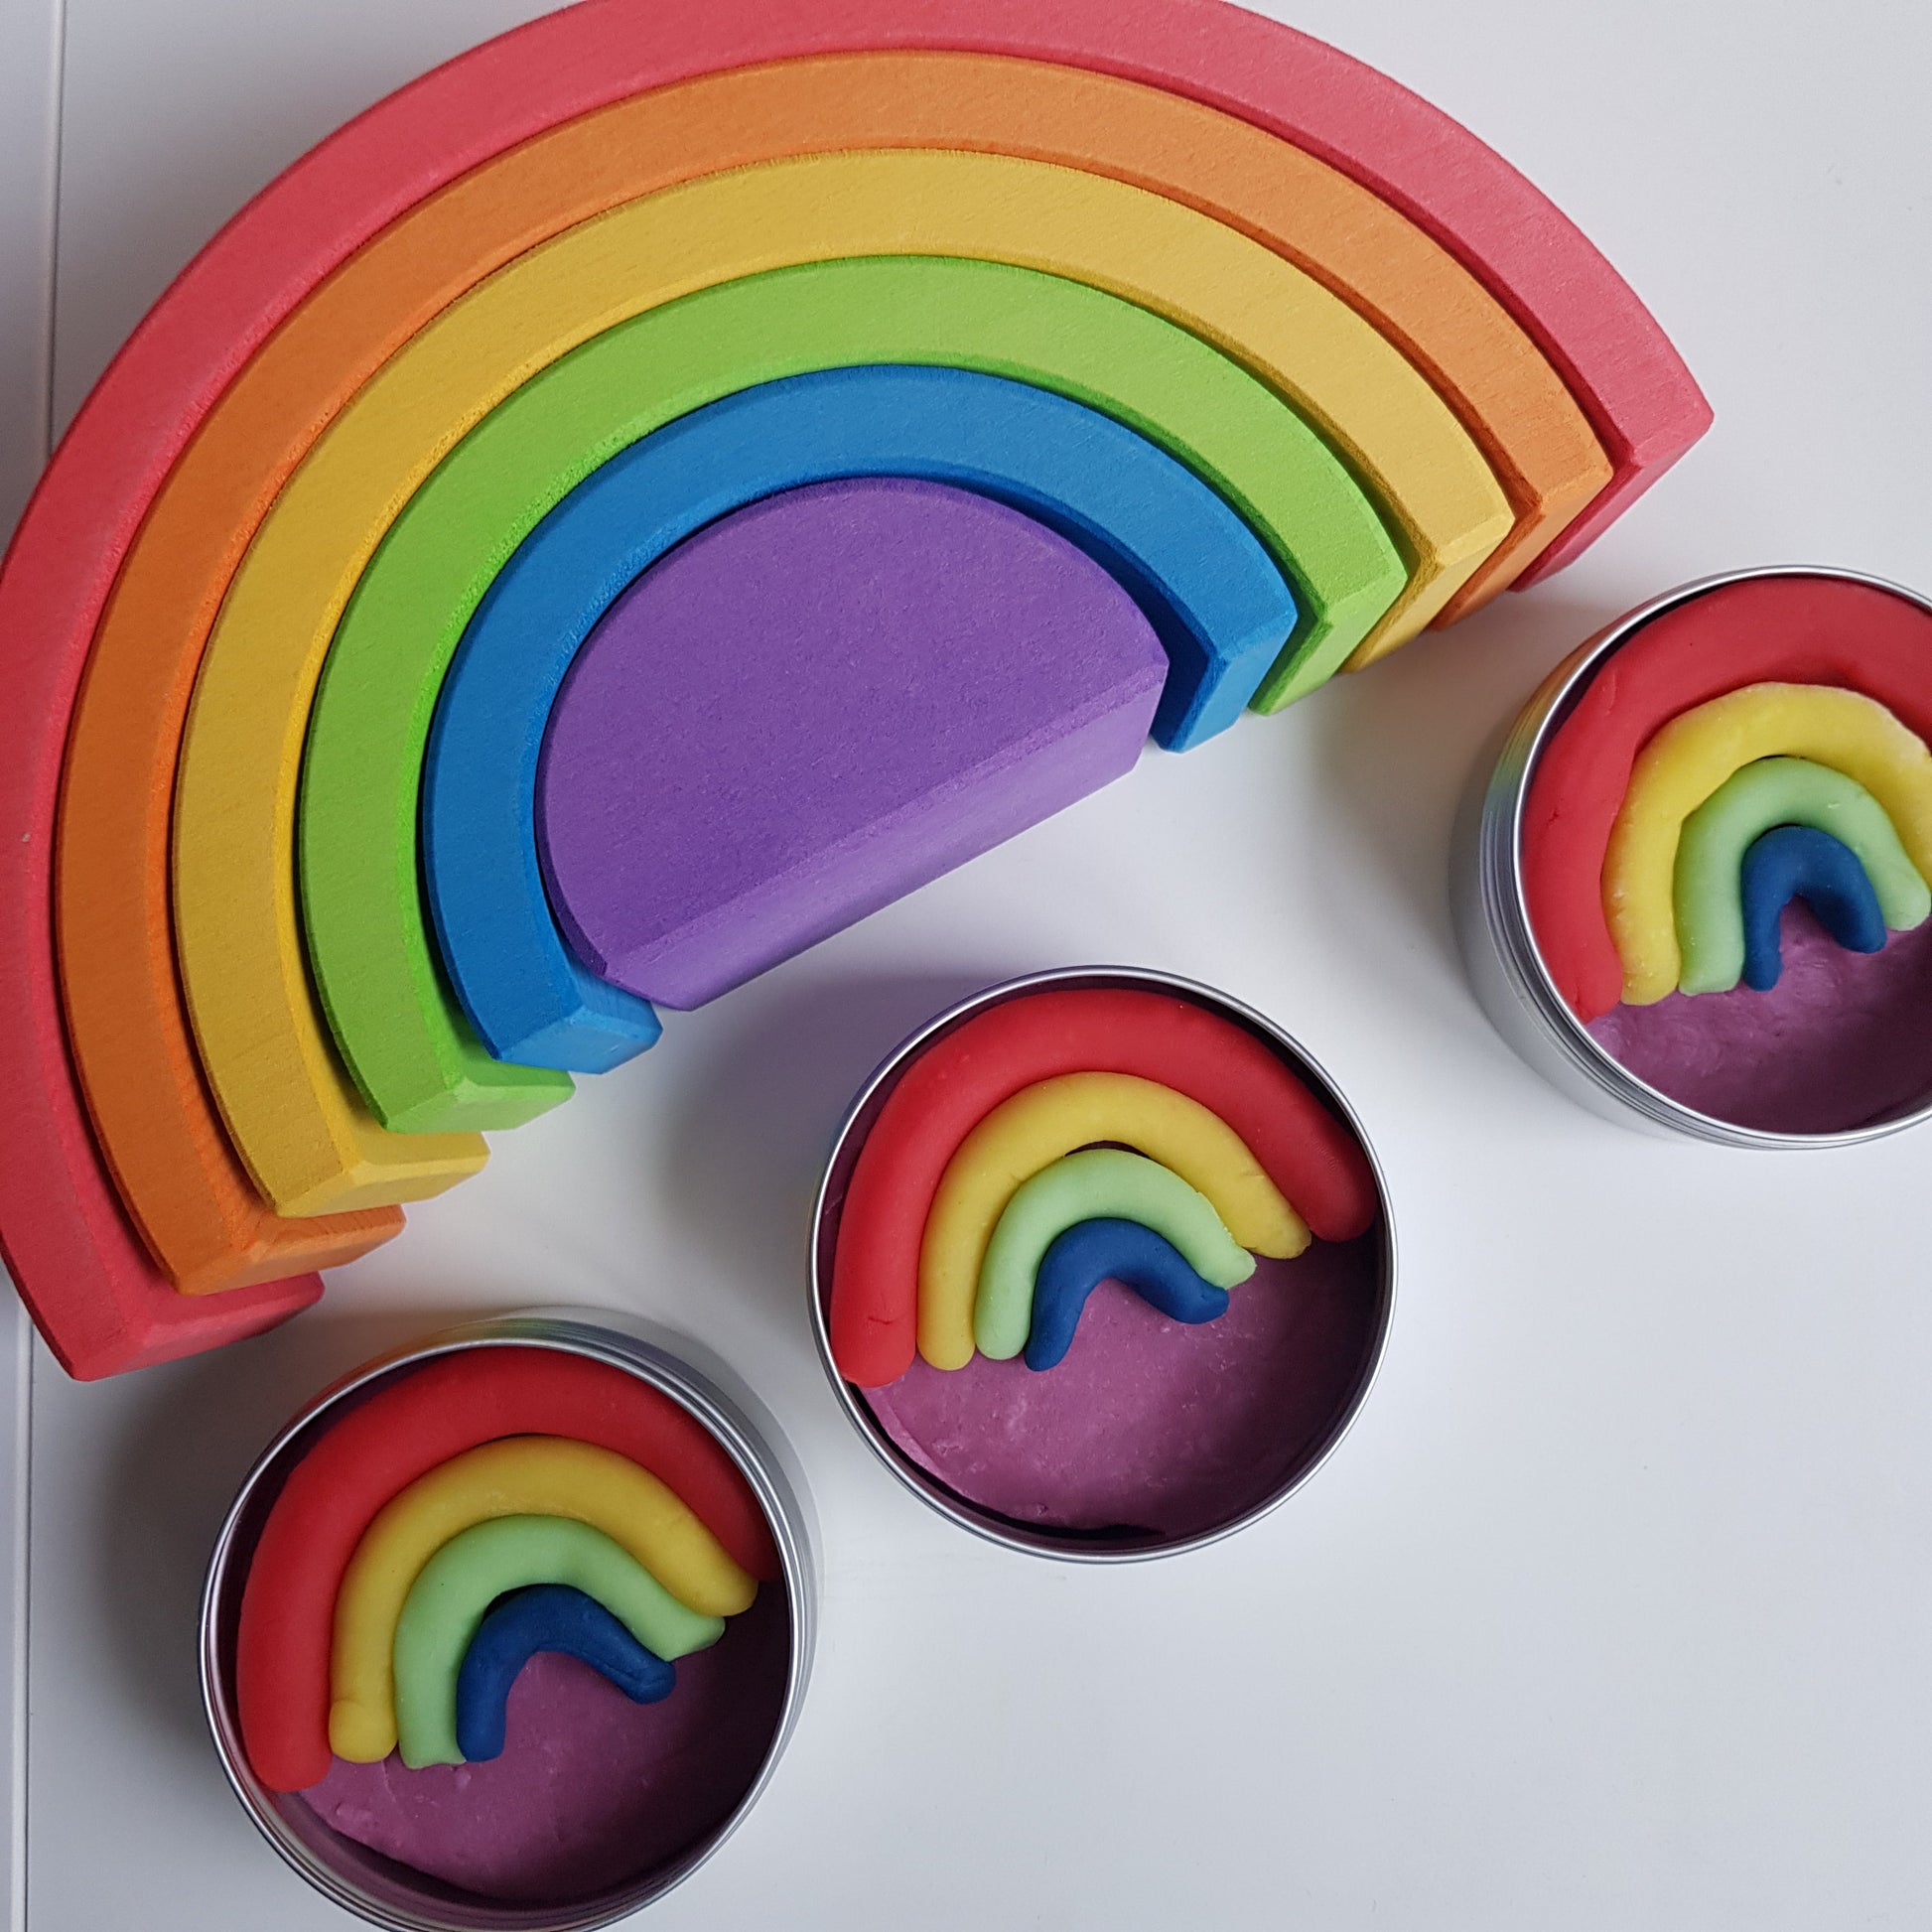 Rainbow Playdough Limited Edition - Hello! Playdough! and TickiT Rainbow Architect